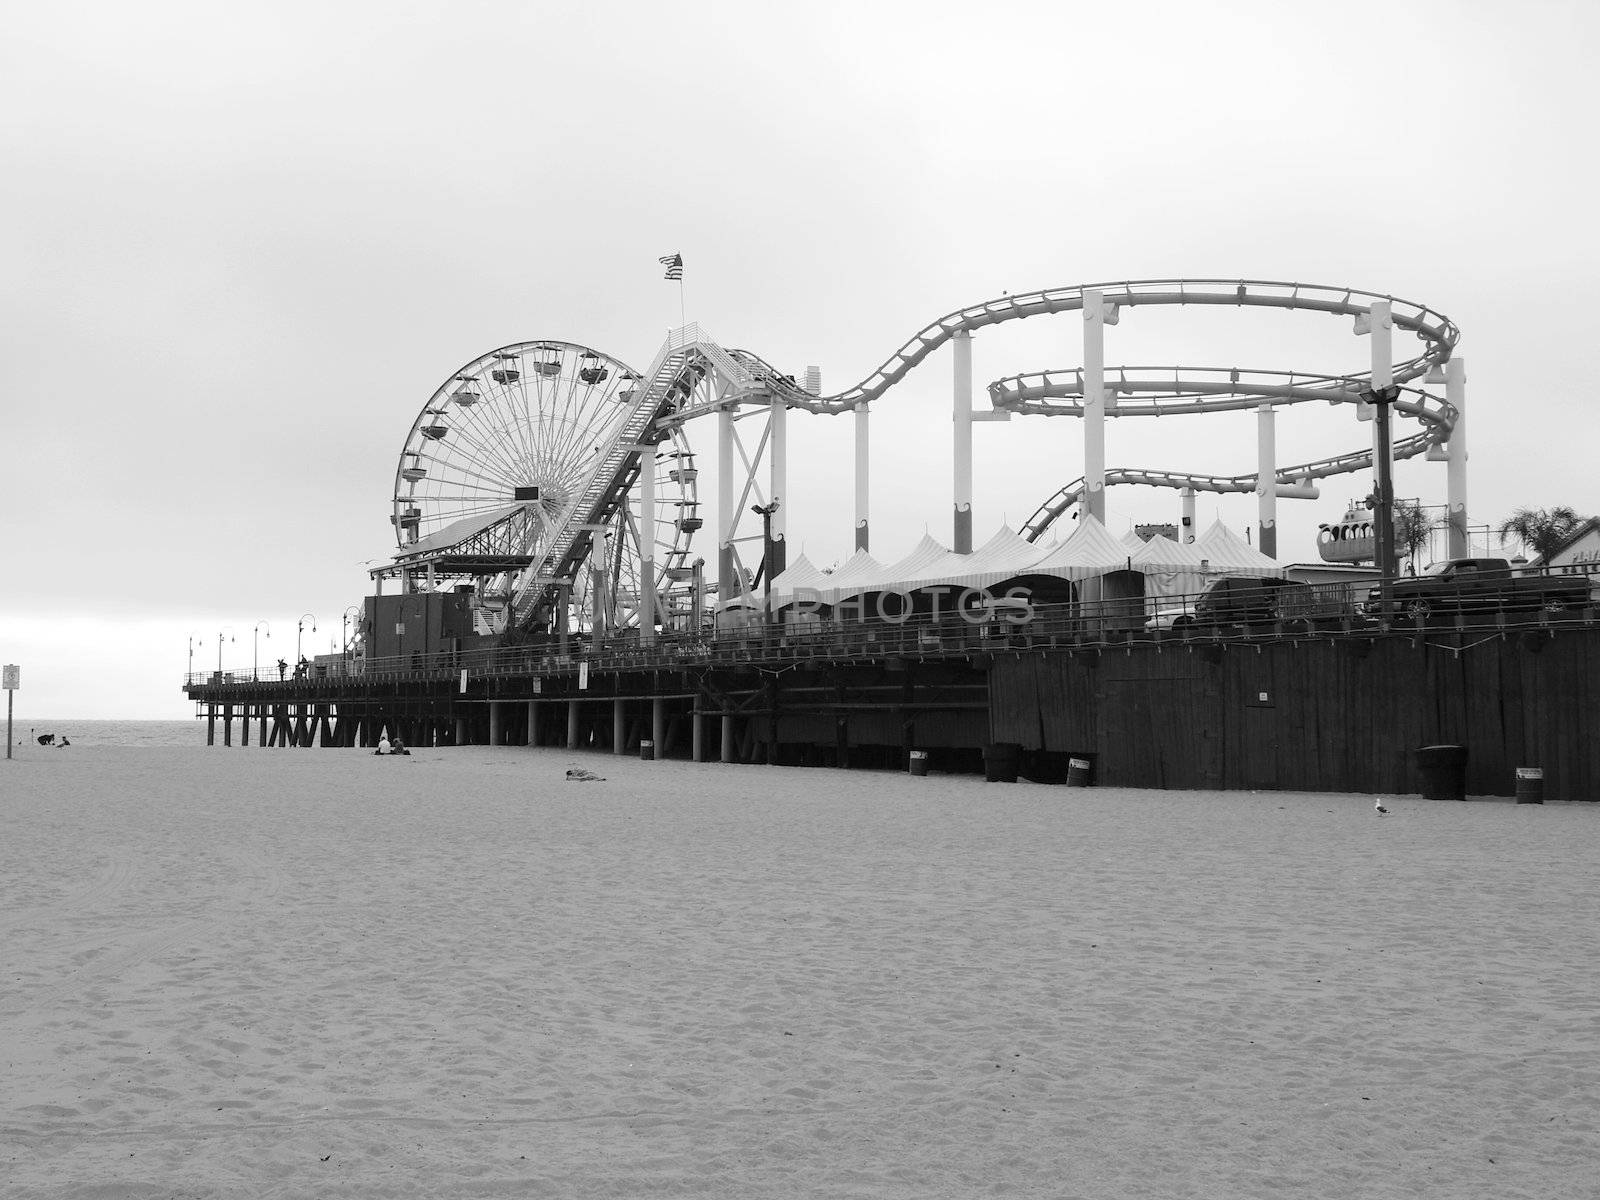 LOS ANGELES - SEPTEMBER 17: Santa Monica Pier in Los Angeles, CA by anderm